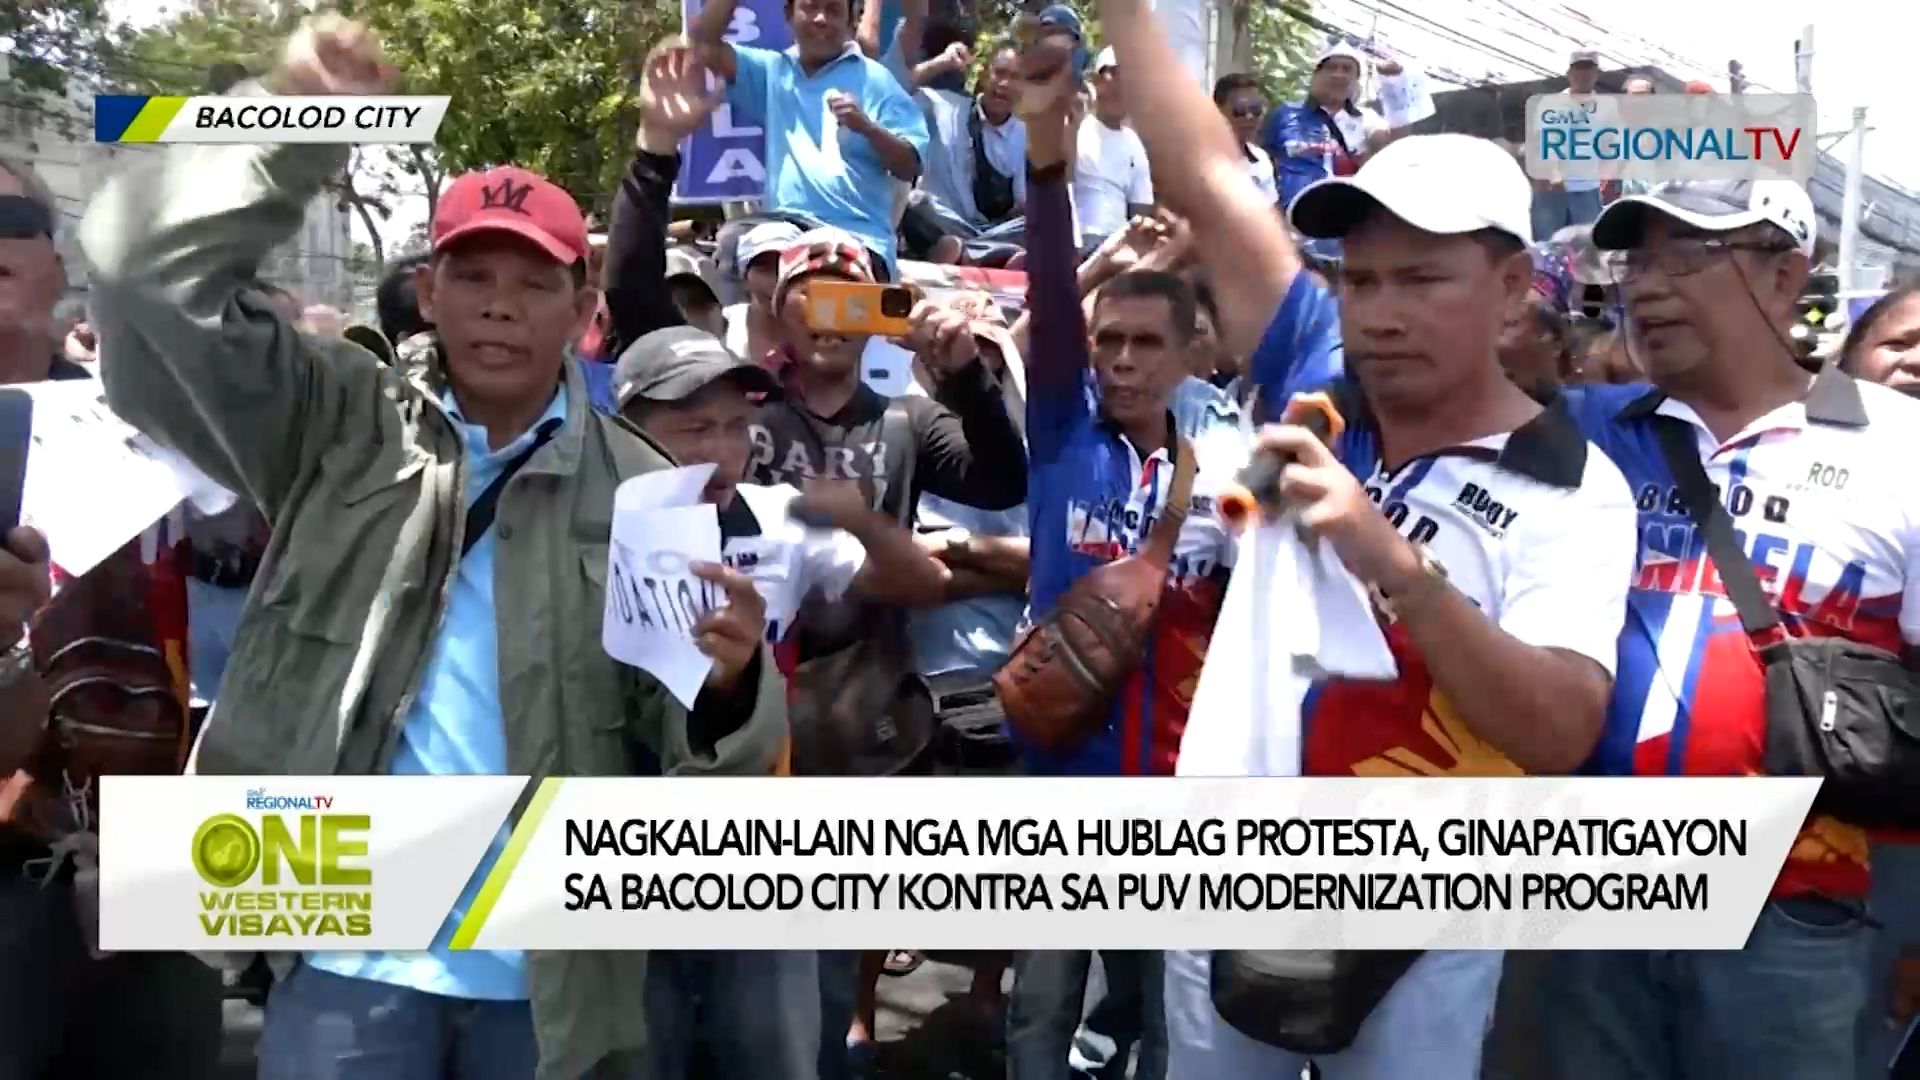 Mga hublag protesta, ginapatigayon sa Bacolod City kontra modernisasyon